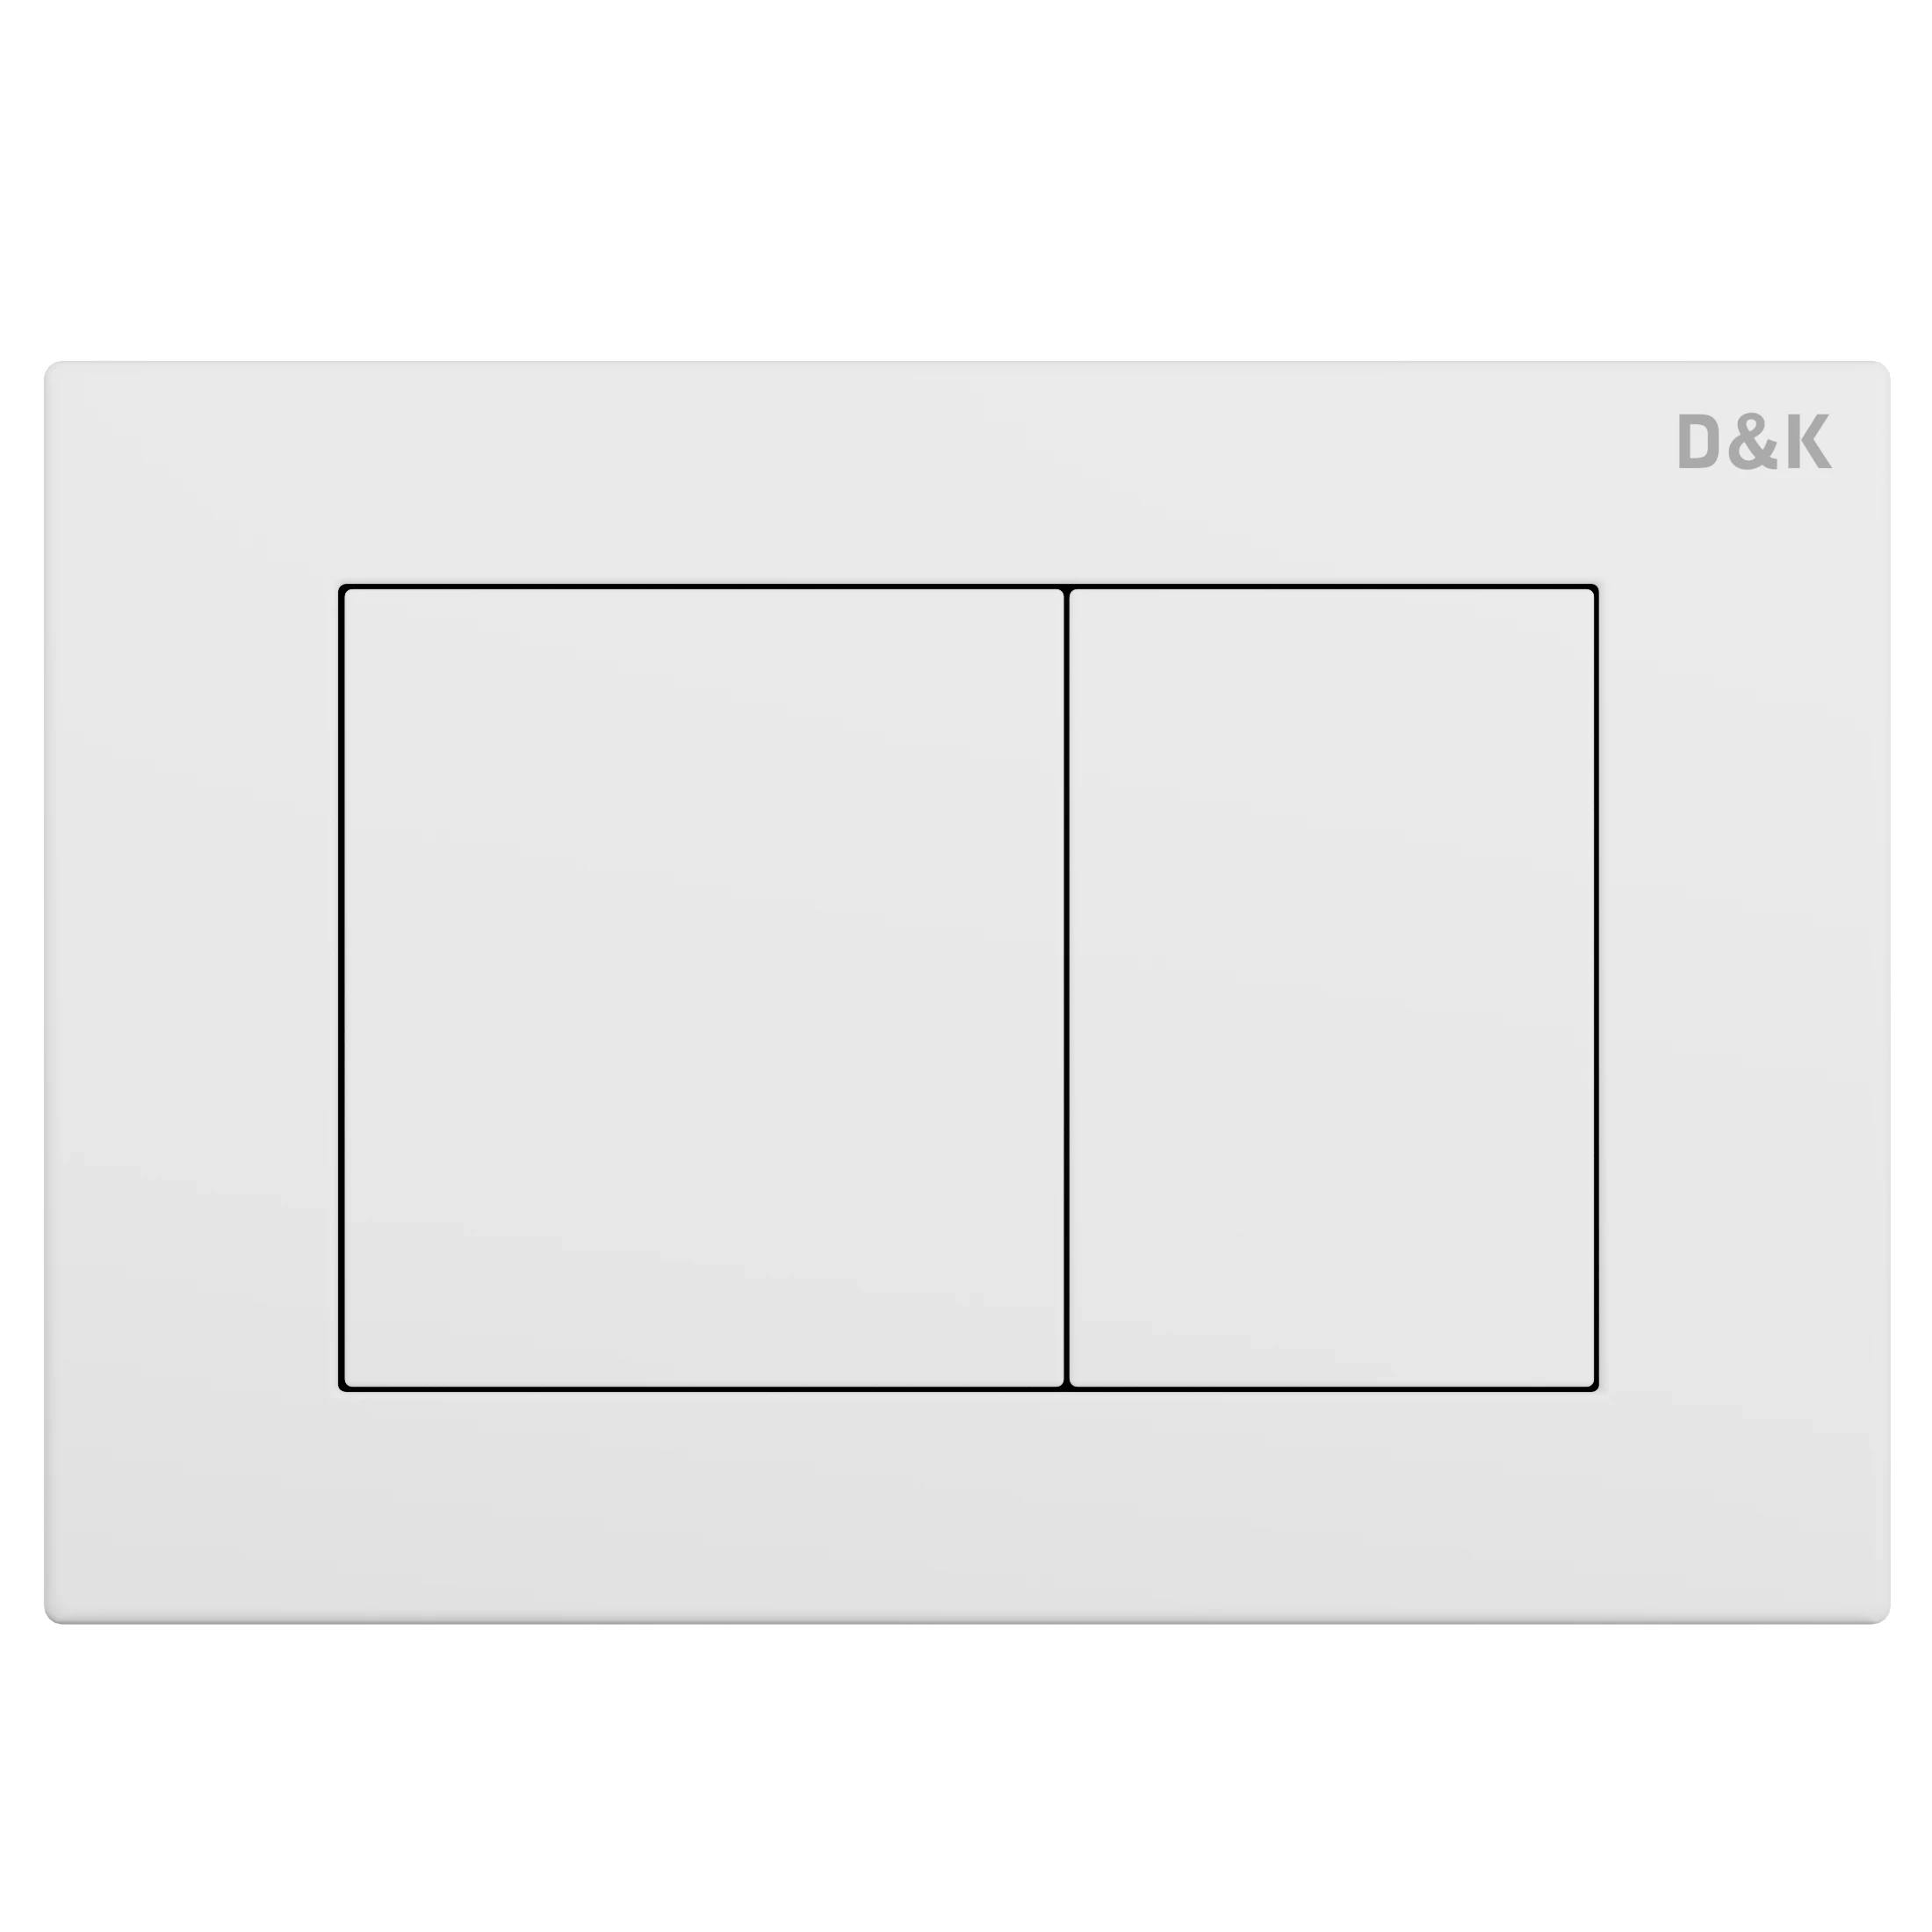 Инсталляция с белой клавишей D&K 400*165*1160мм (DI8640116) - фото 5